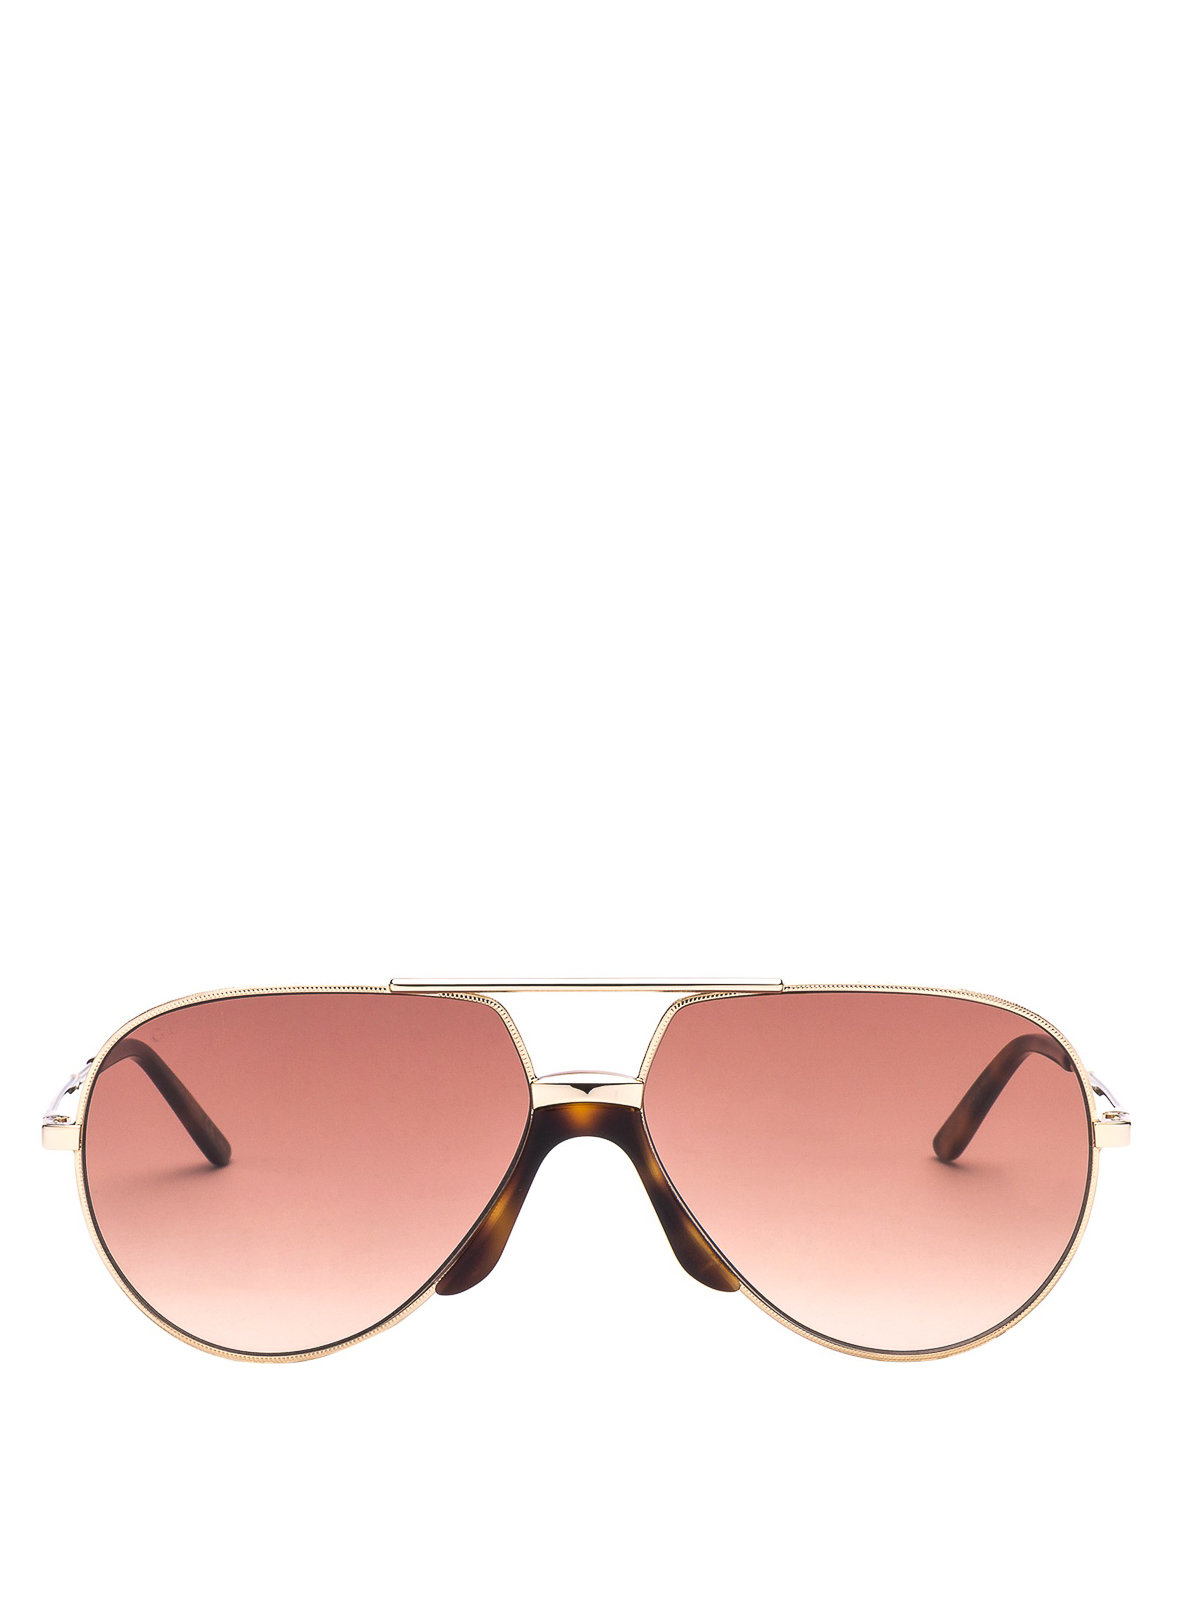 gucci tortoise aviator sunglasses